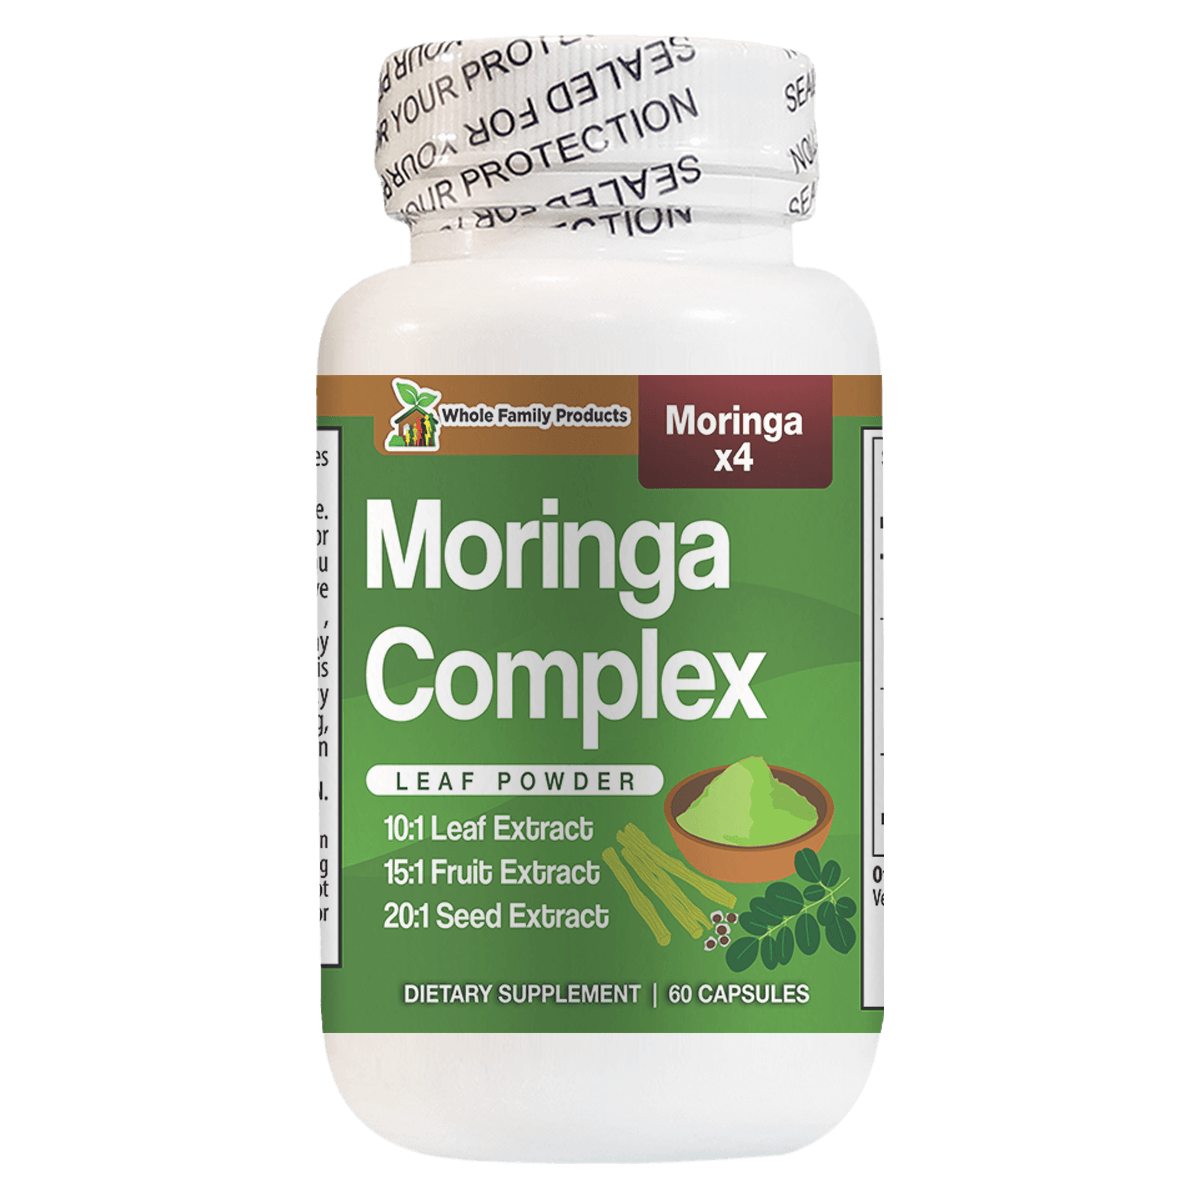 Moringa Complex Leaf Powder for Improved Health